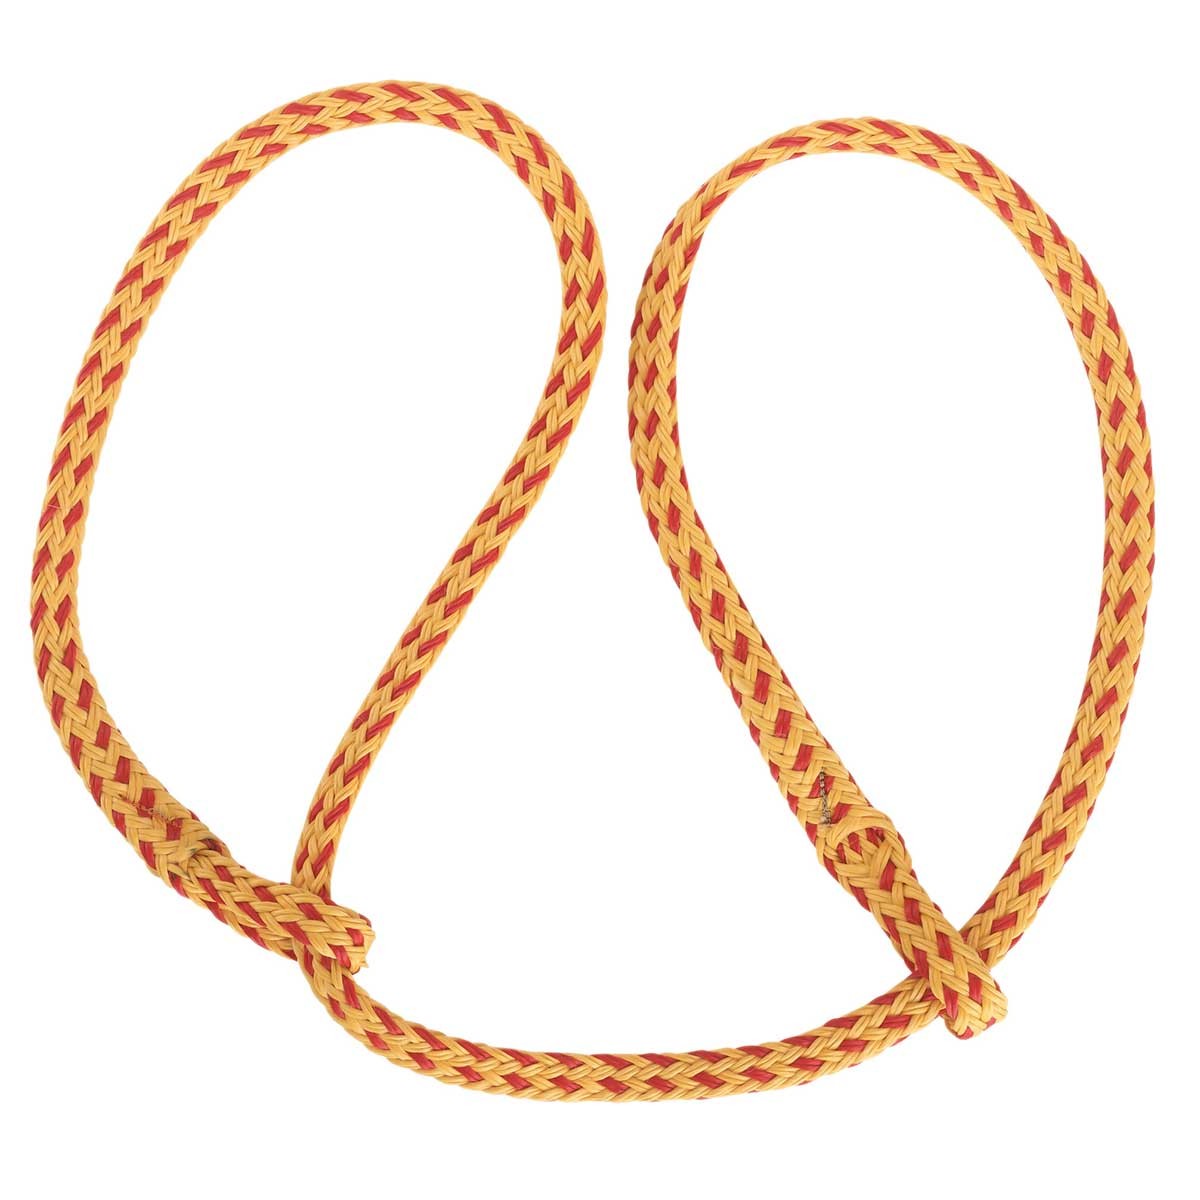 Calving cord 2 loops 130cm